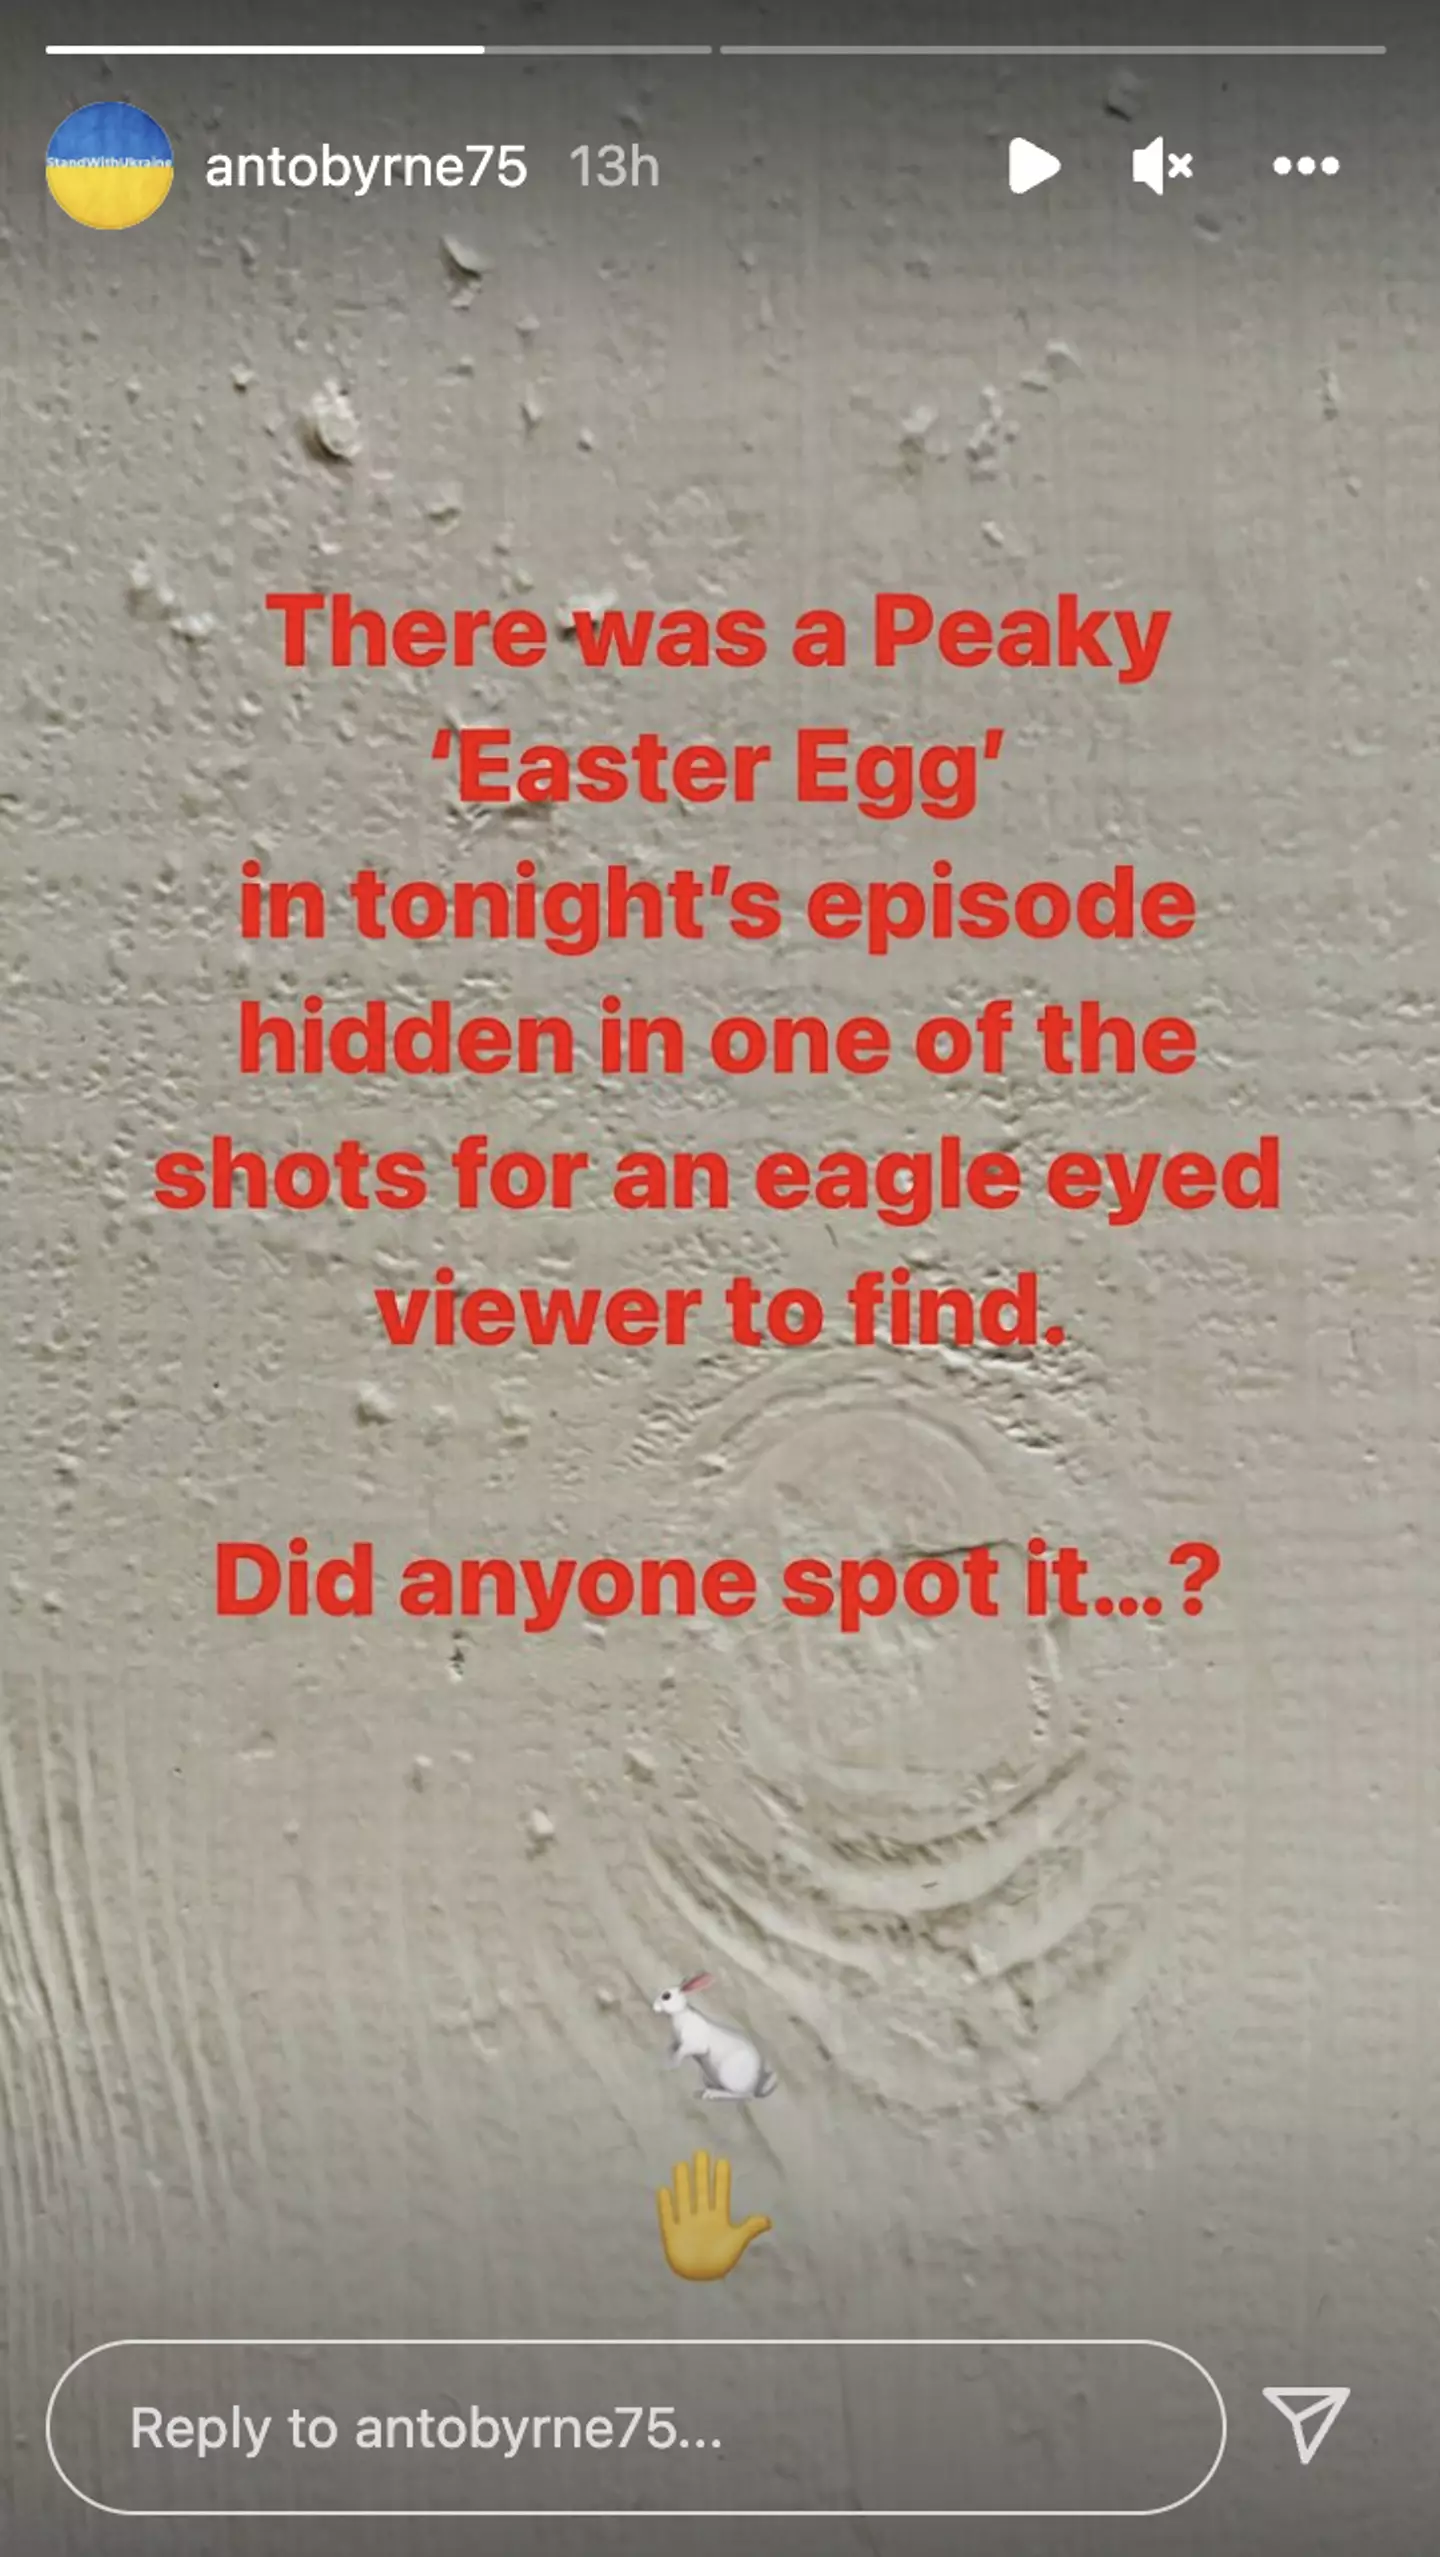 Spot the mystery clue? (